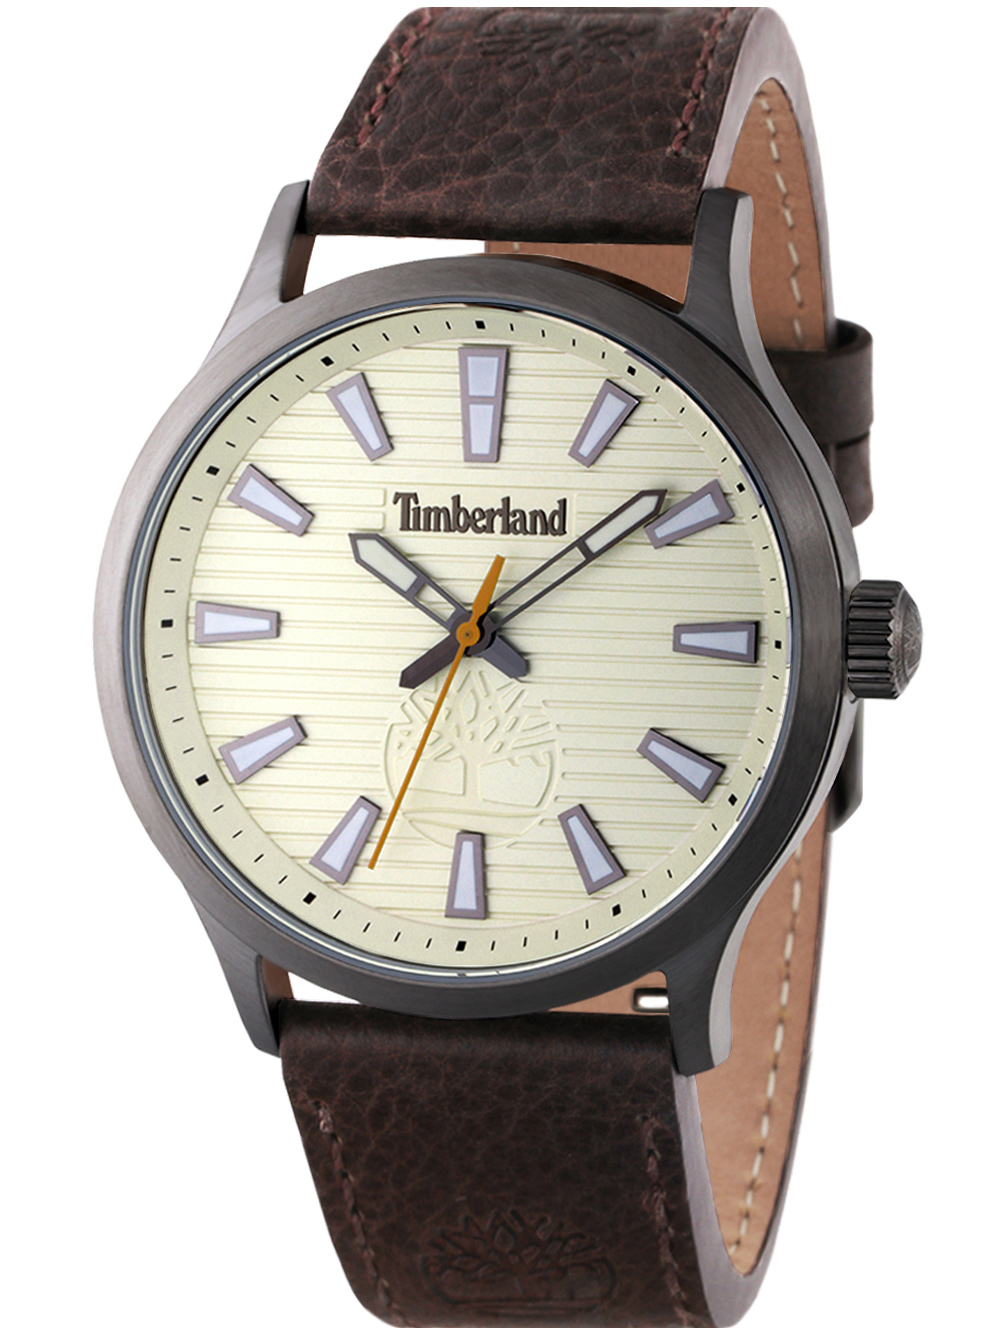 TDWGA2152004 watch Trumbull cheap Timeshop24 Mens shopping: Timberland 45mm